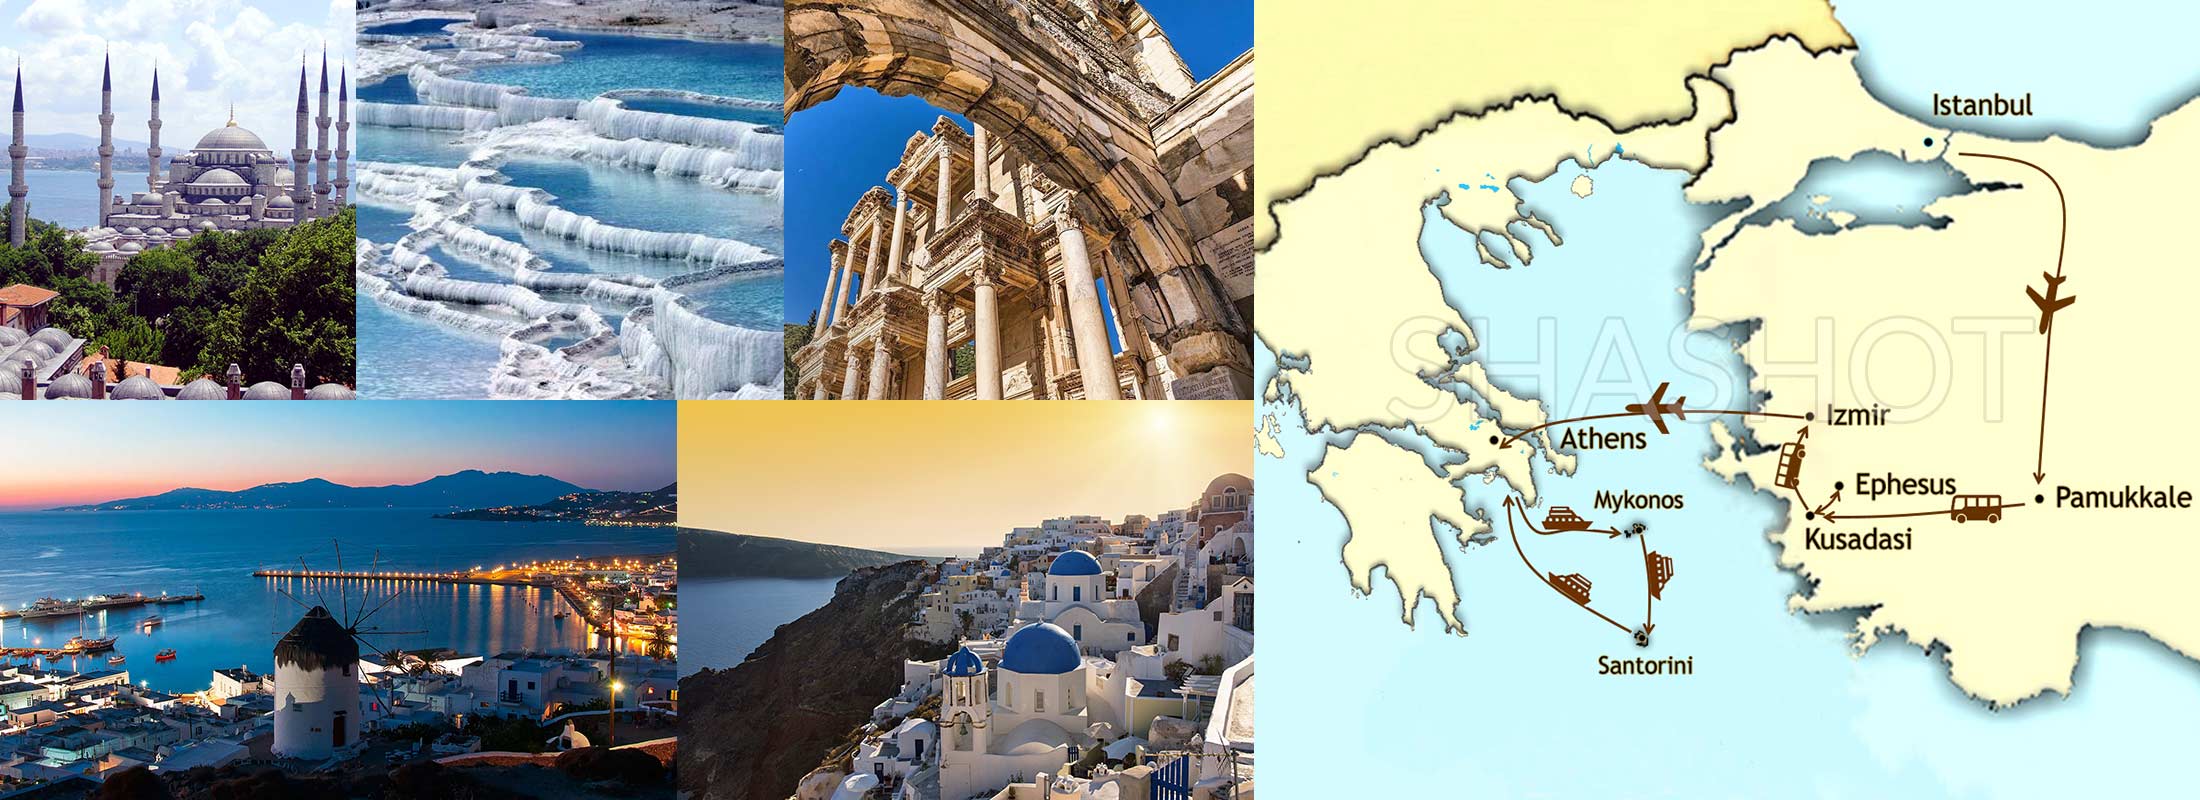 11-DAYS-TURKEY-GREECE-PACKAGE-TOUR-ISTANBUL-PHESUS-PAMUKKALE-ATHENS-SANTORINI-MYKONOS-map